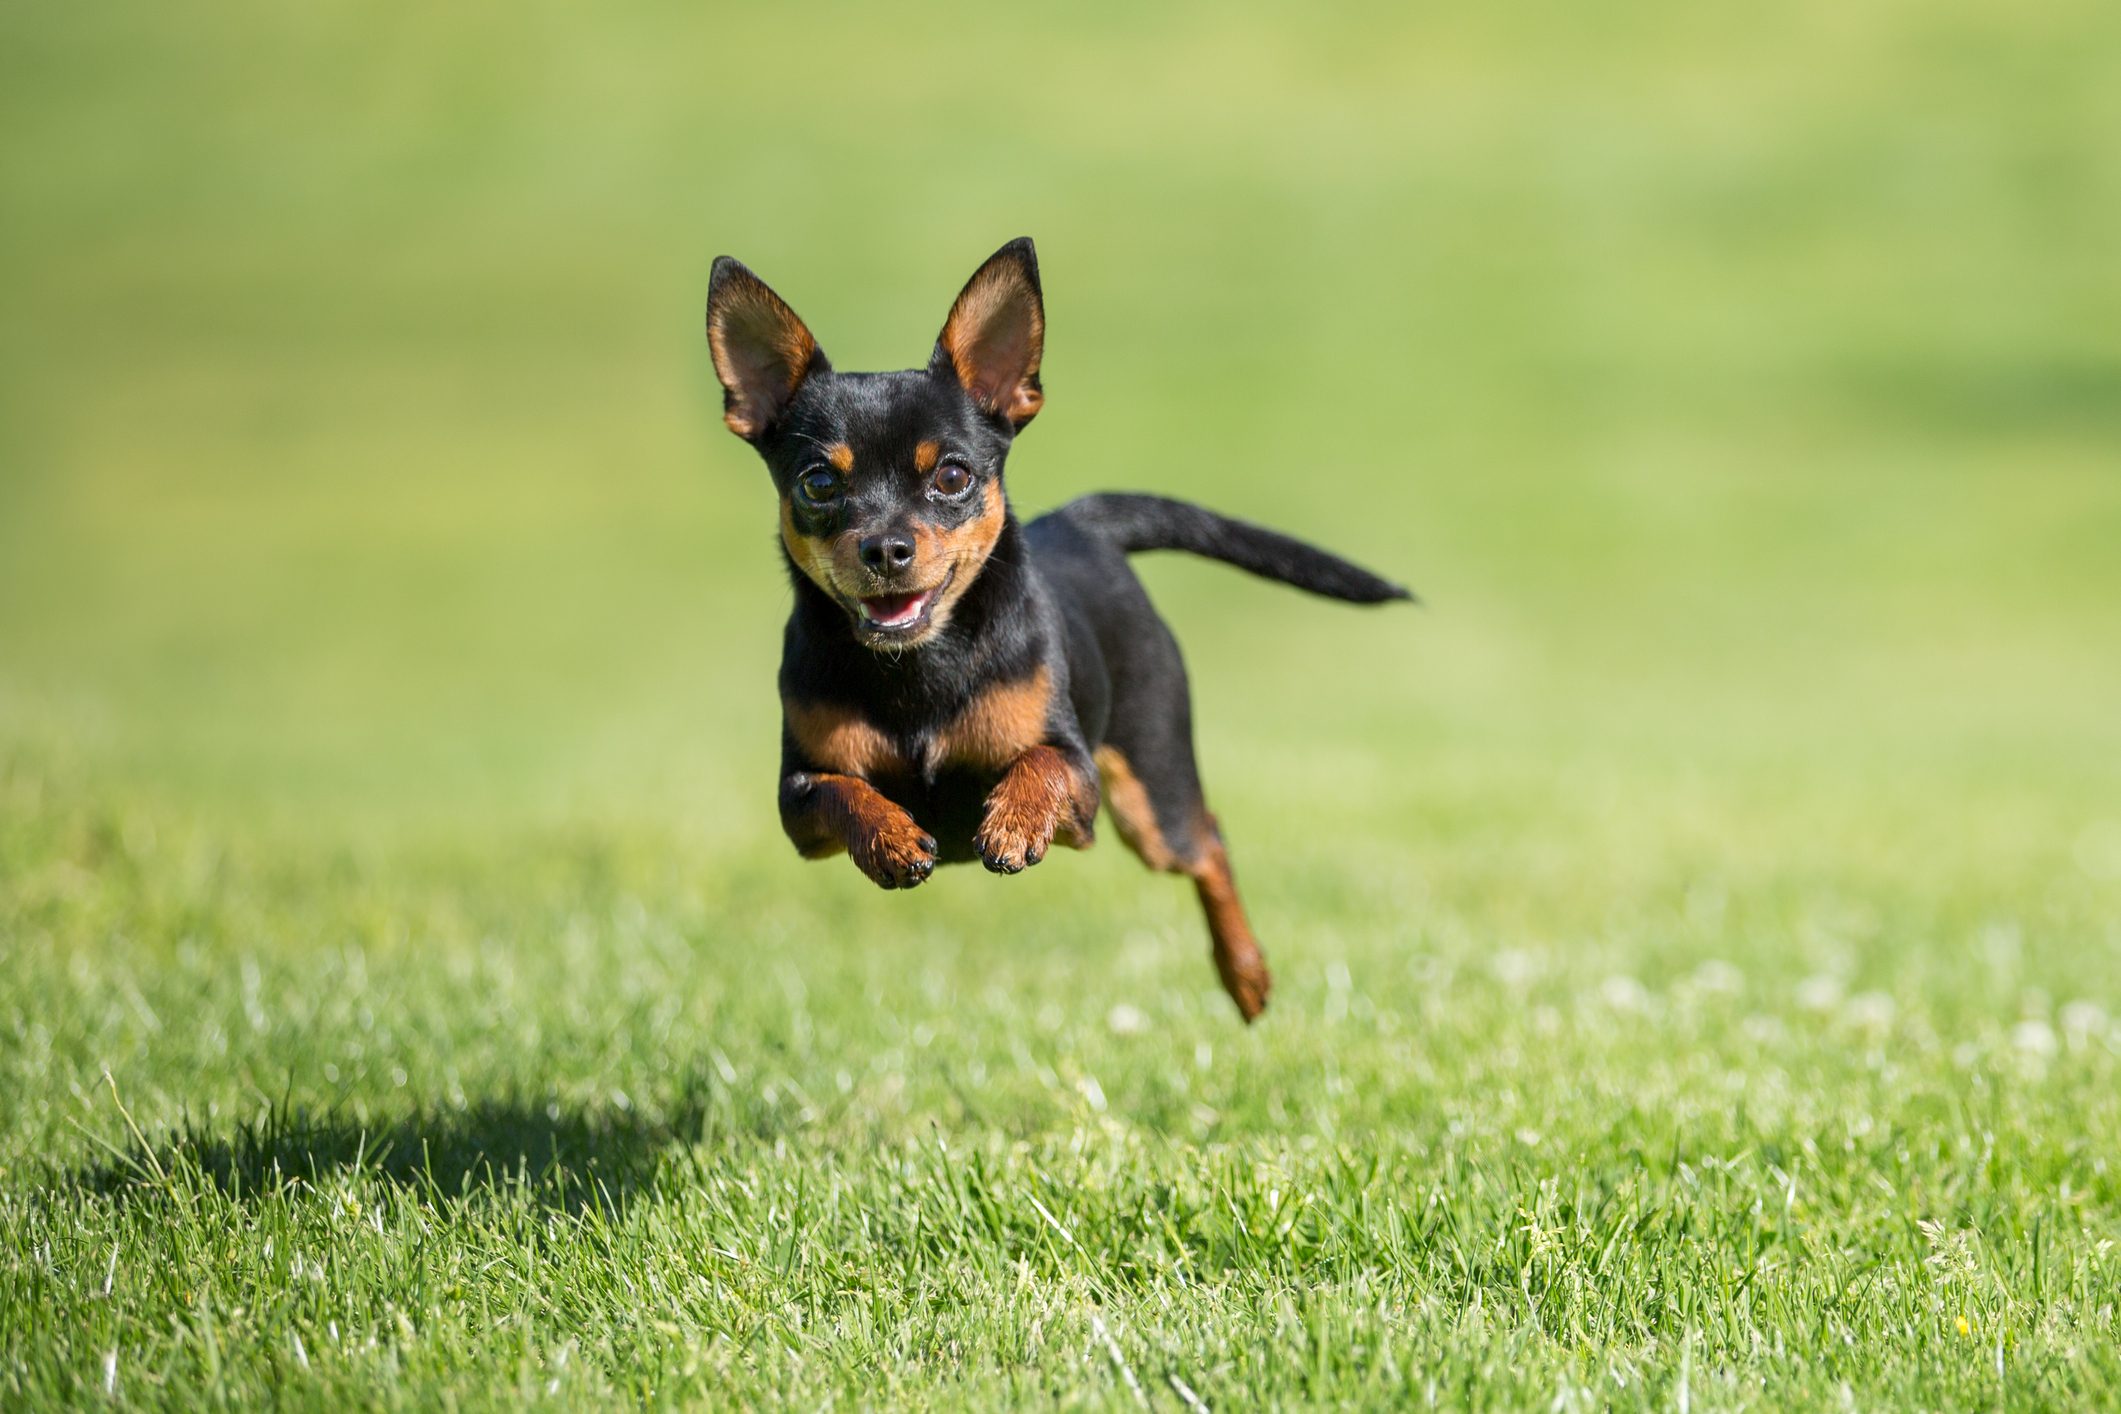 Chihuahua dog running across grass